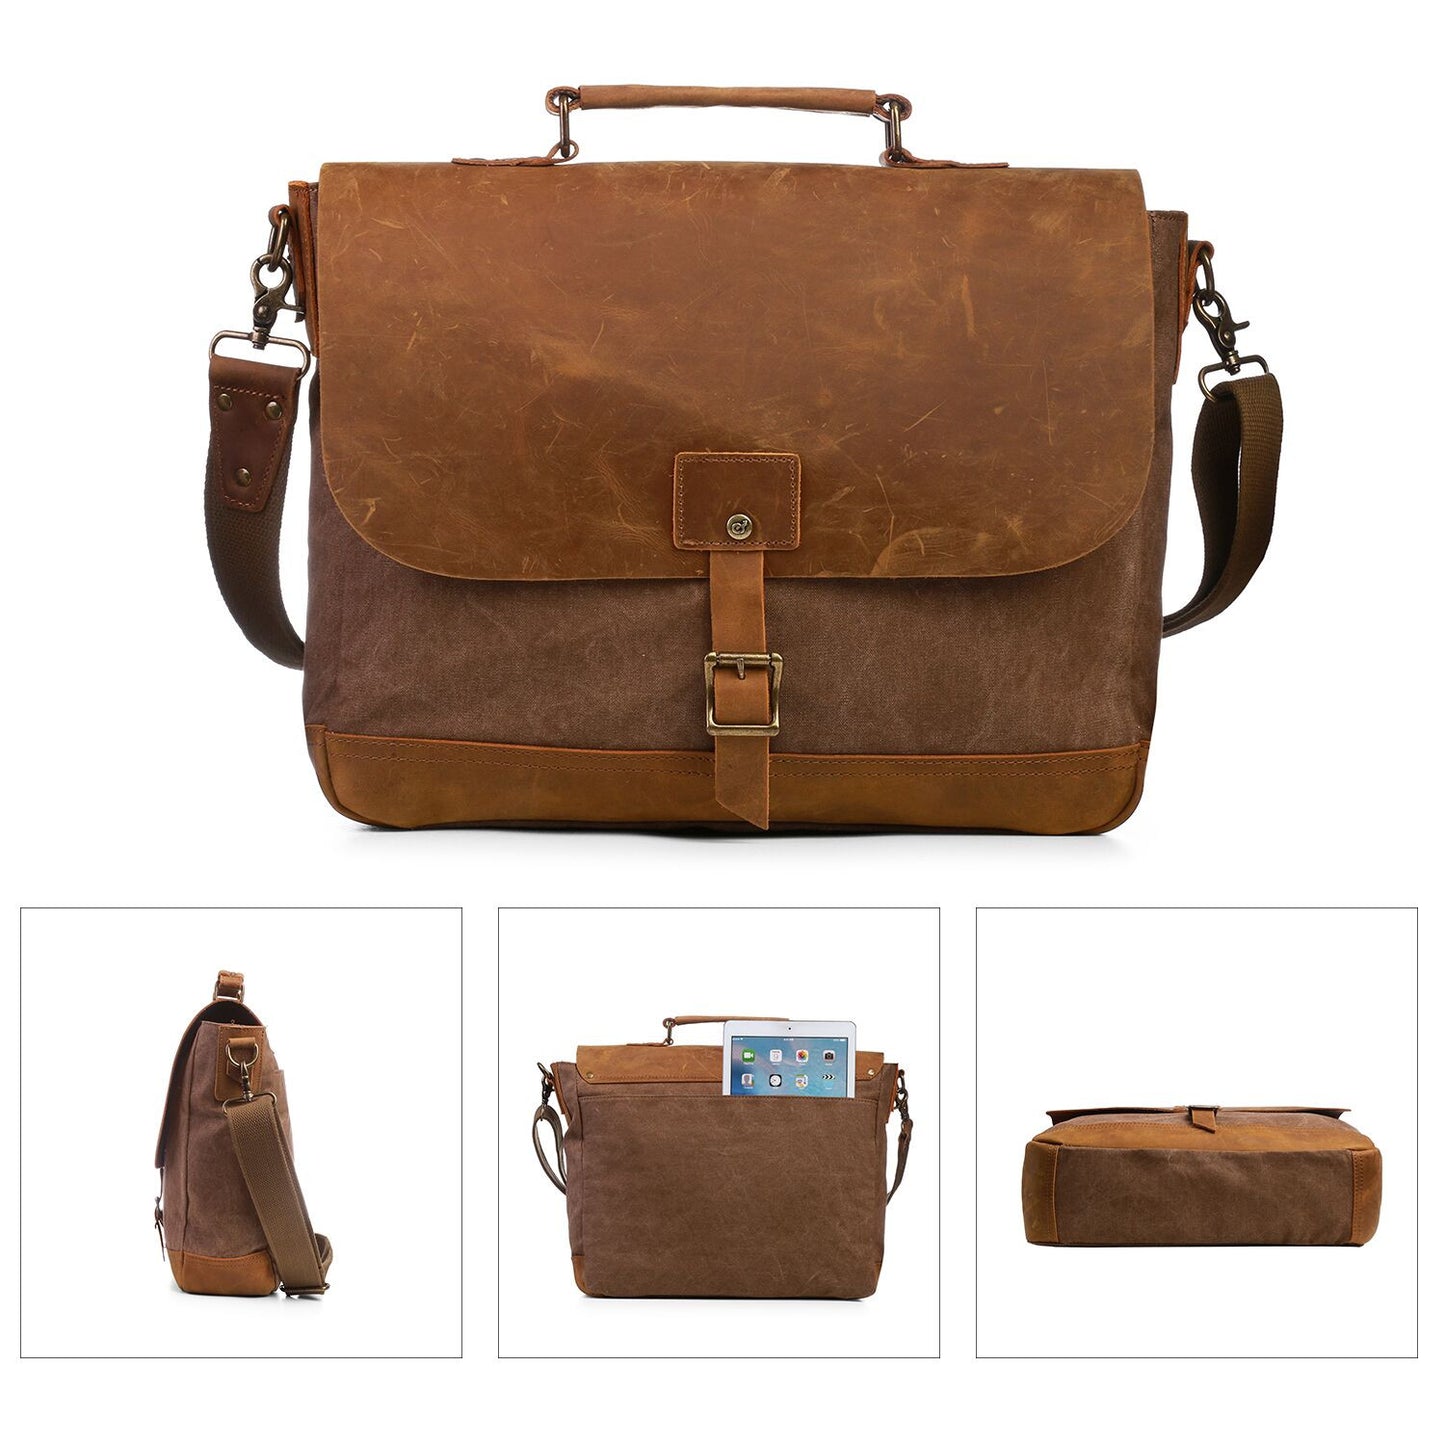 ECOSUSI Canvas Laptop Bag Briefcase Business Handbag Messenger Shoulder Bag with Padded Compartment for 15.6" Laptop